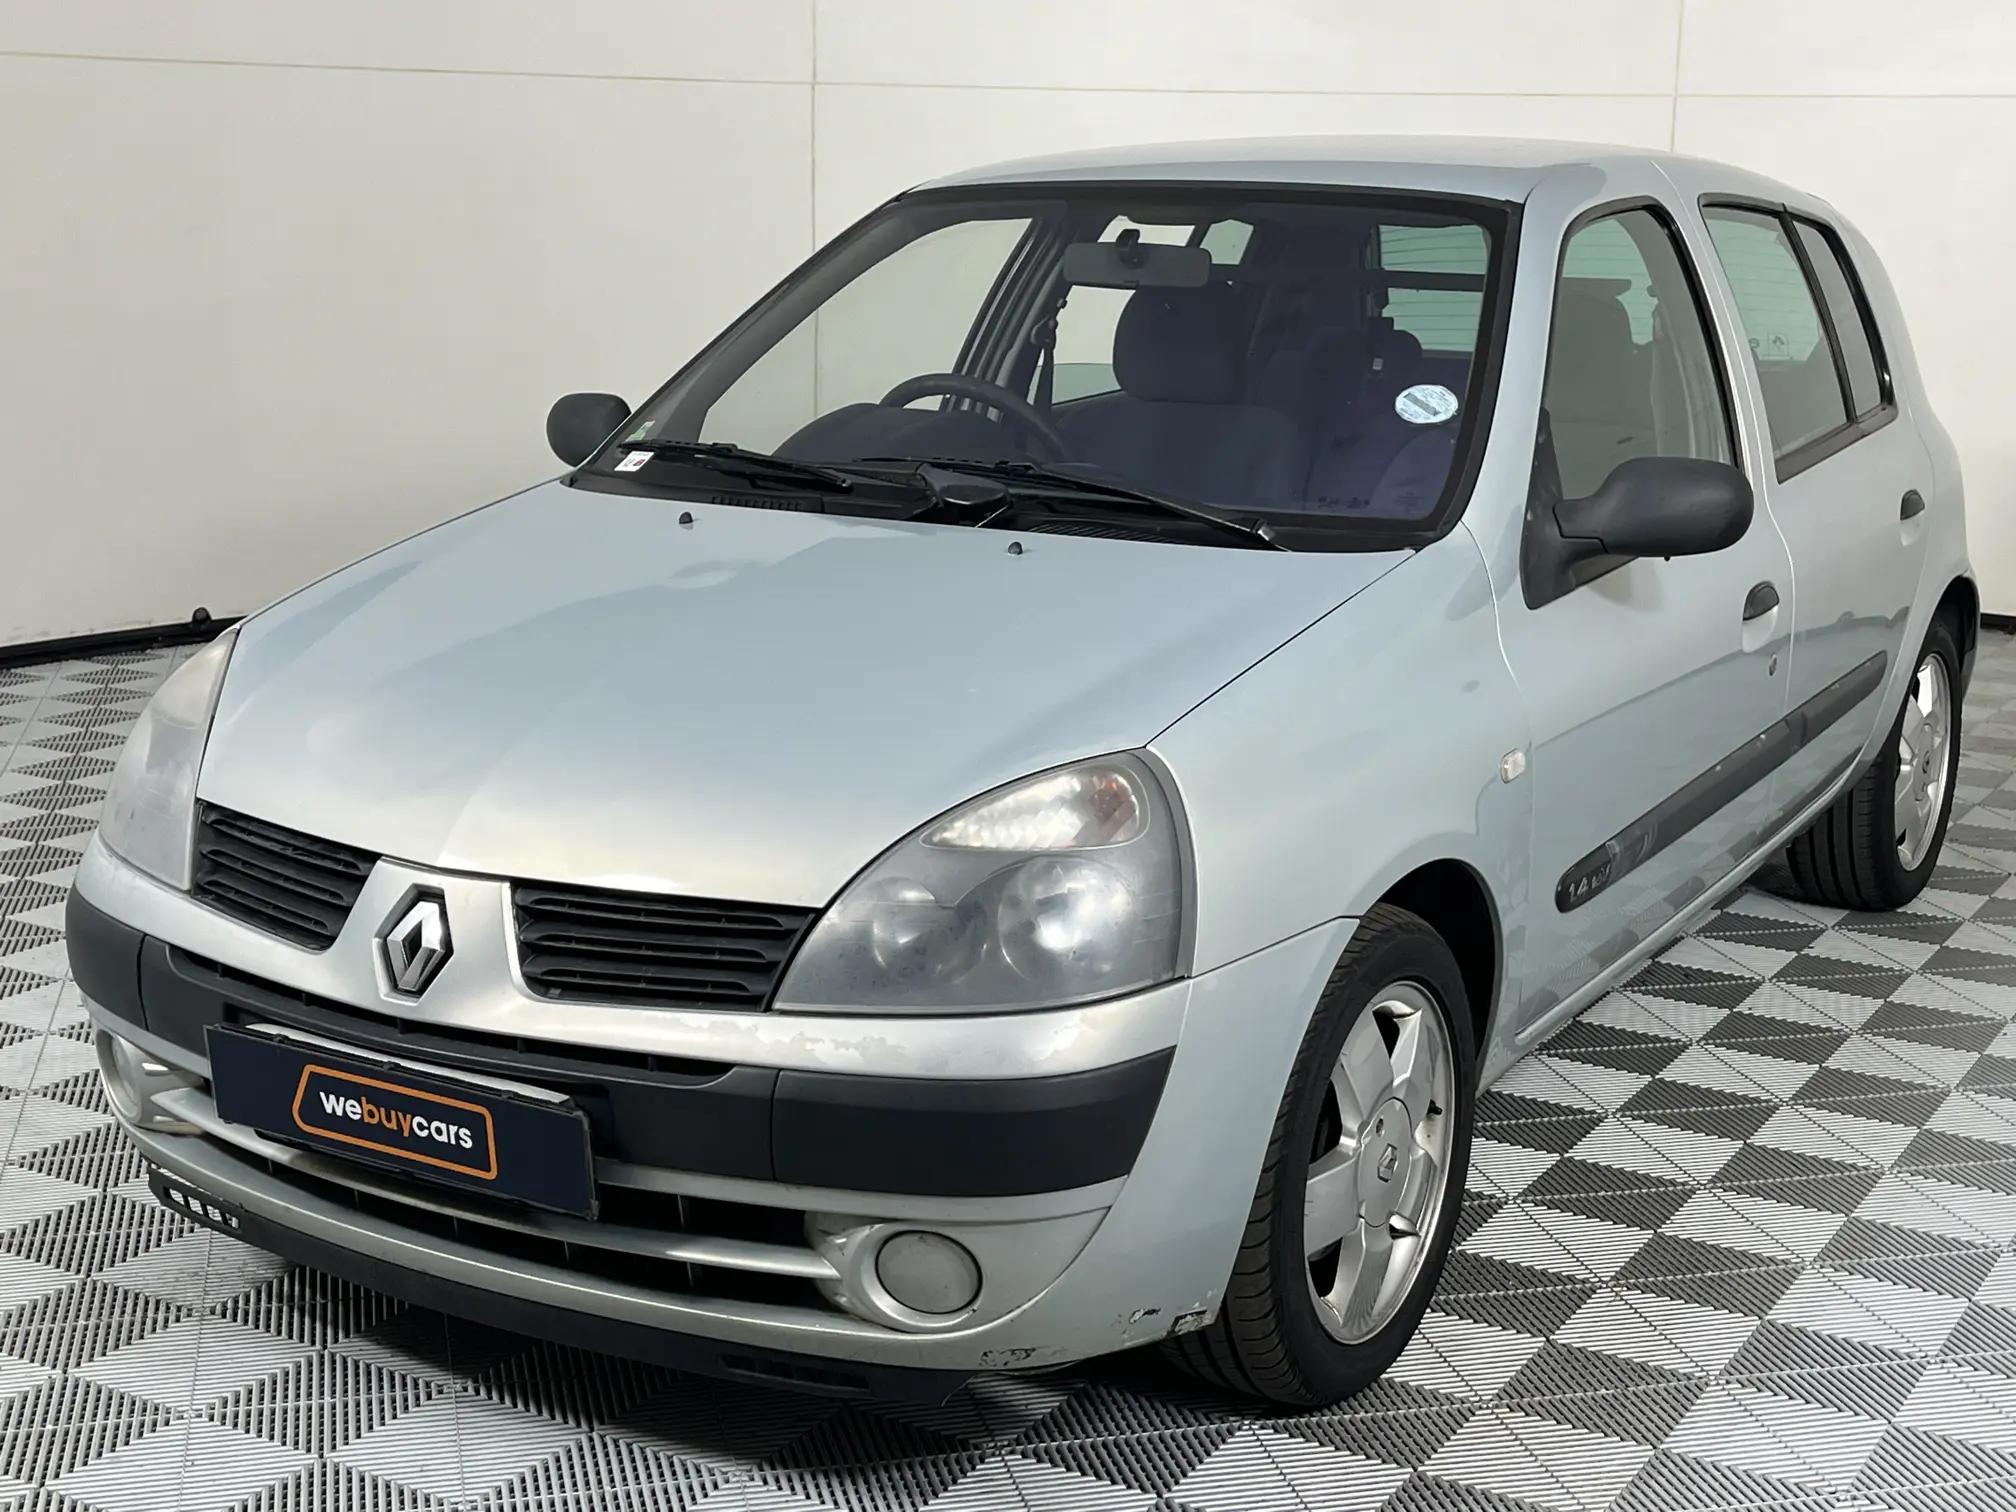 Renault Clio II 1.4 Expression Auto